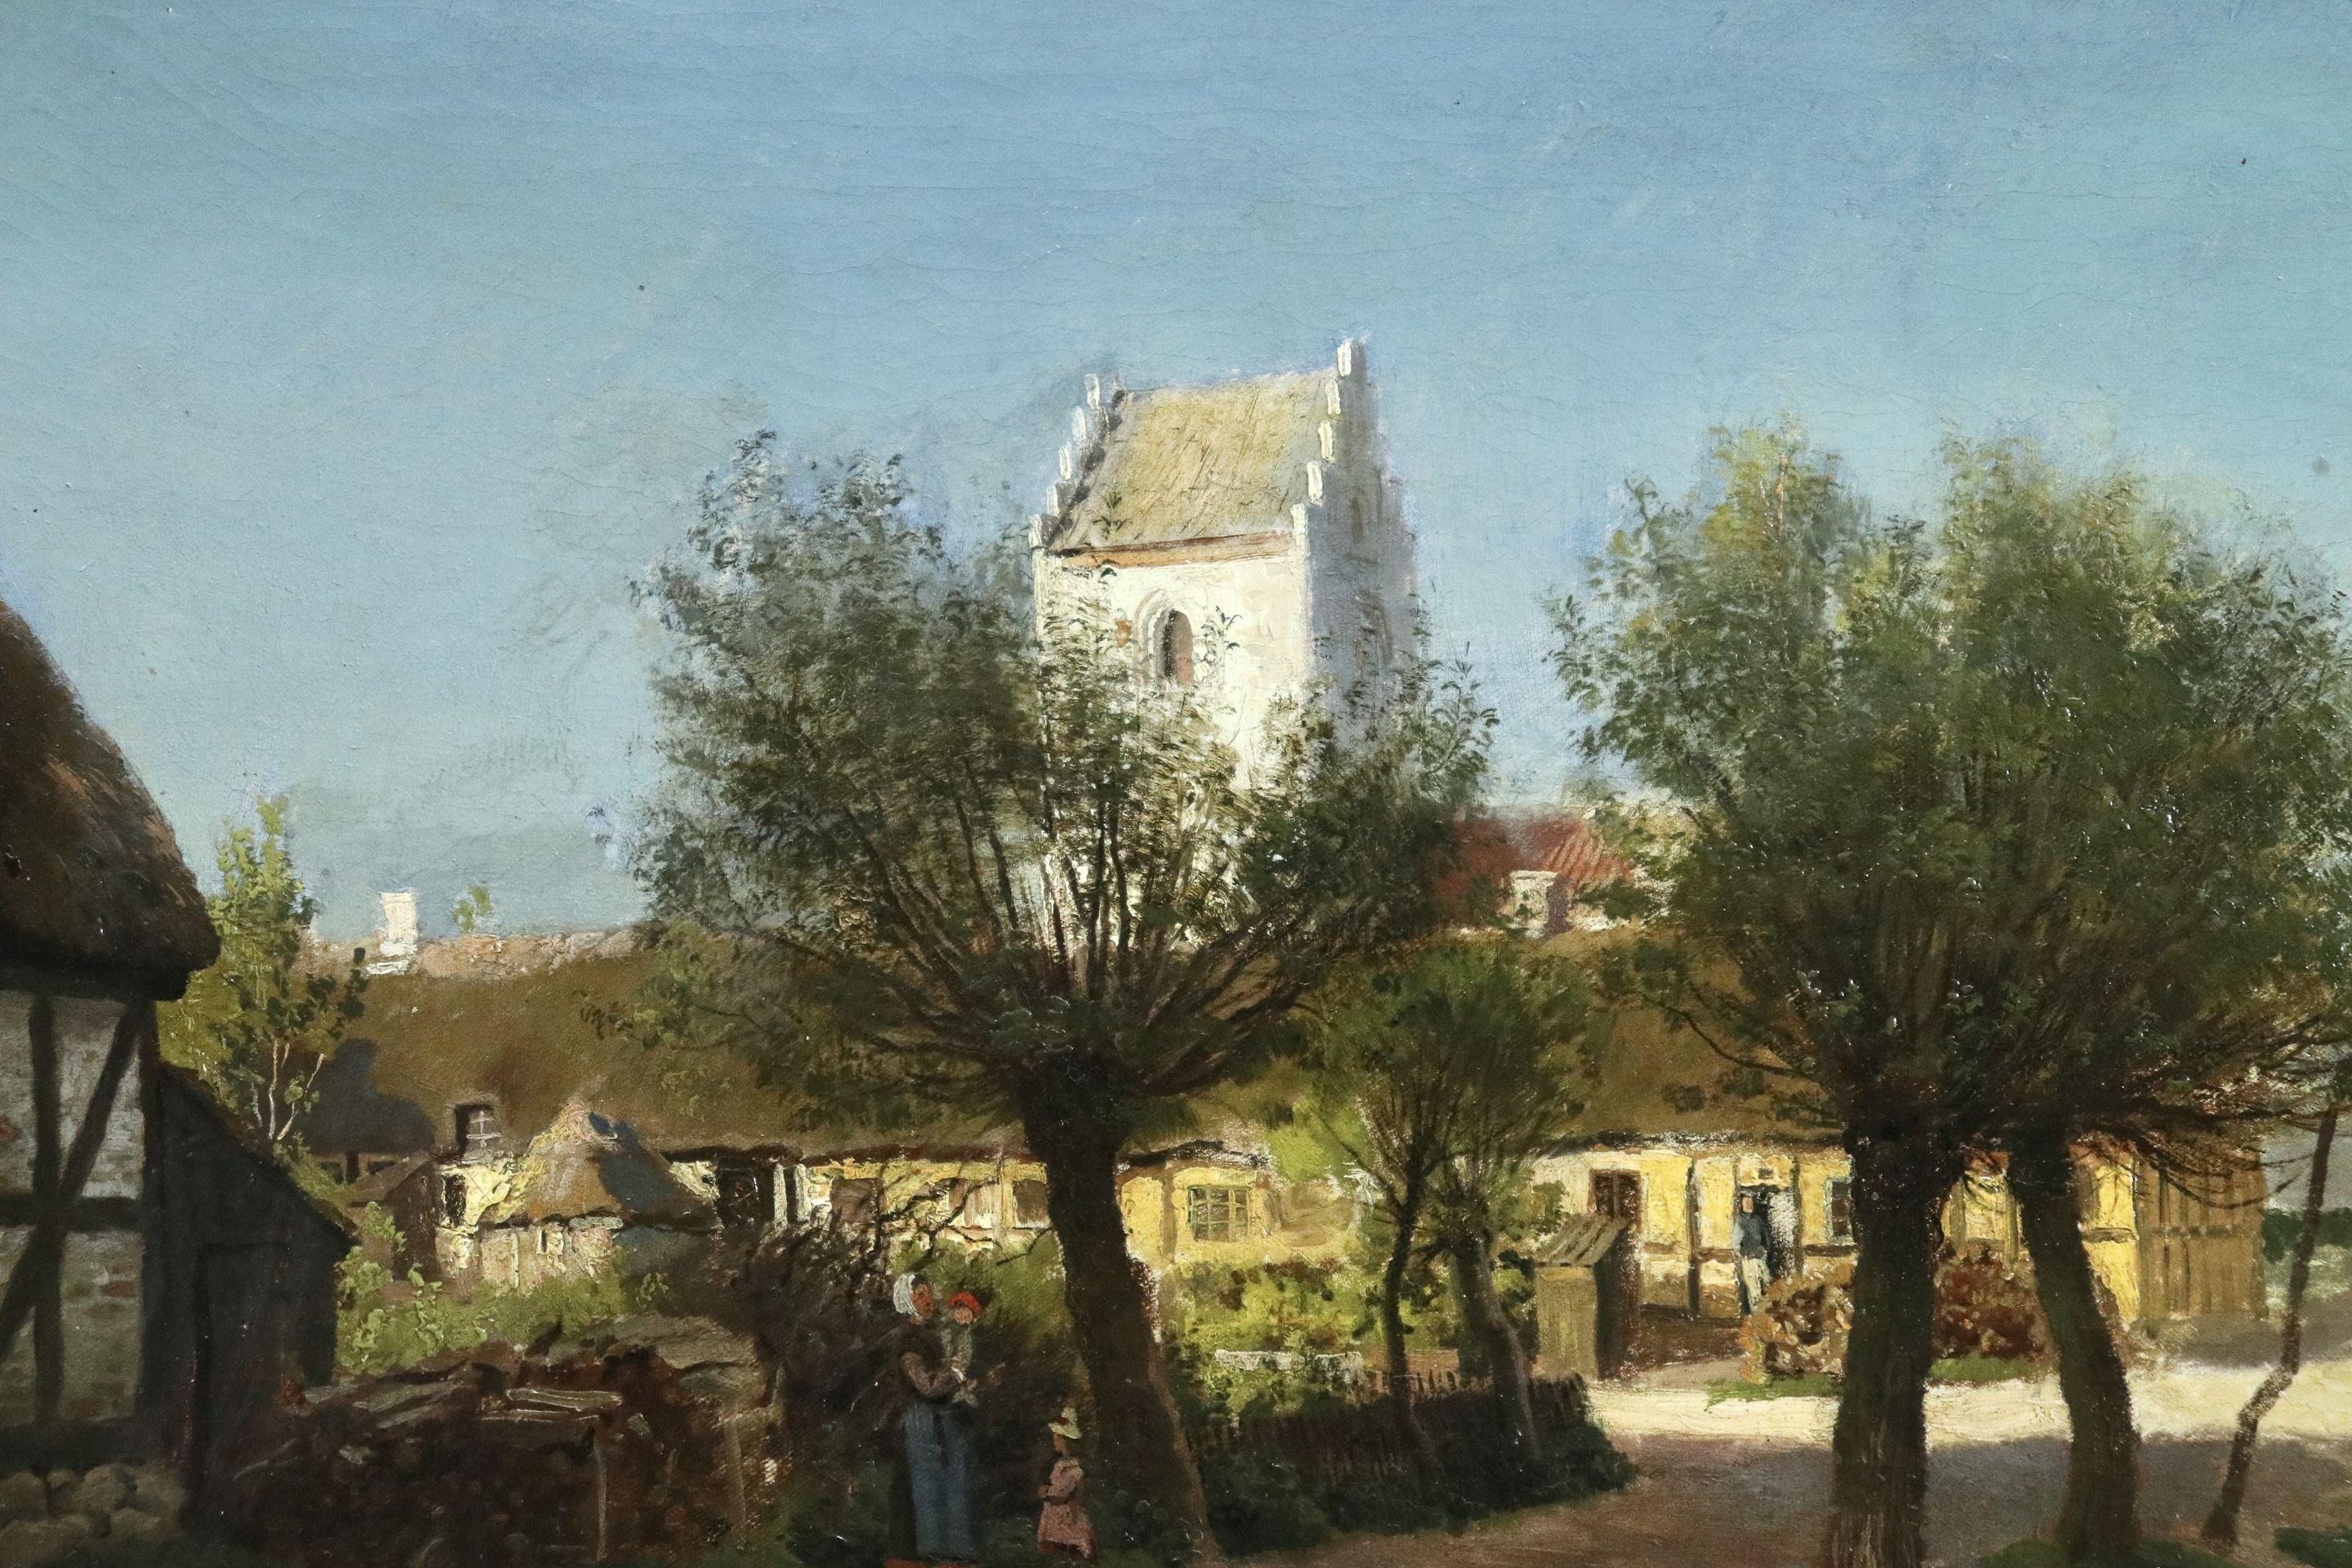 Summer Afternoon in the Village-Aarhus Region - 19th Century Landscape - Monsted - Realist Painting by Peder Mørk Mønsted